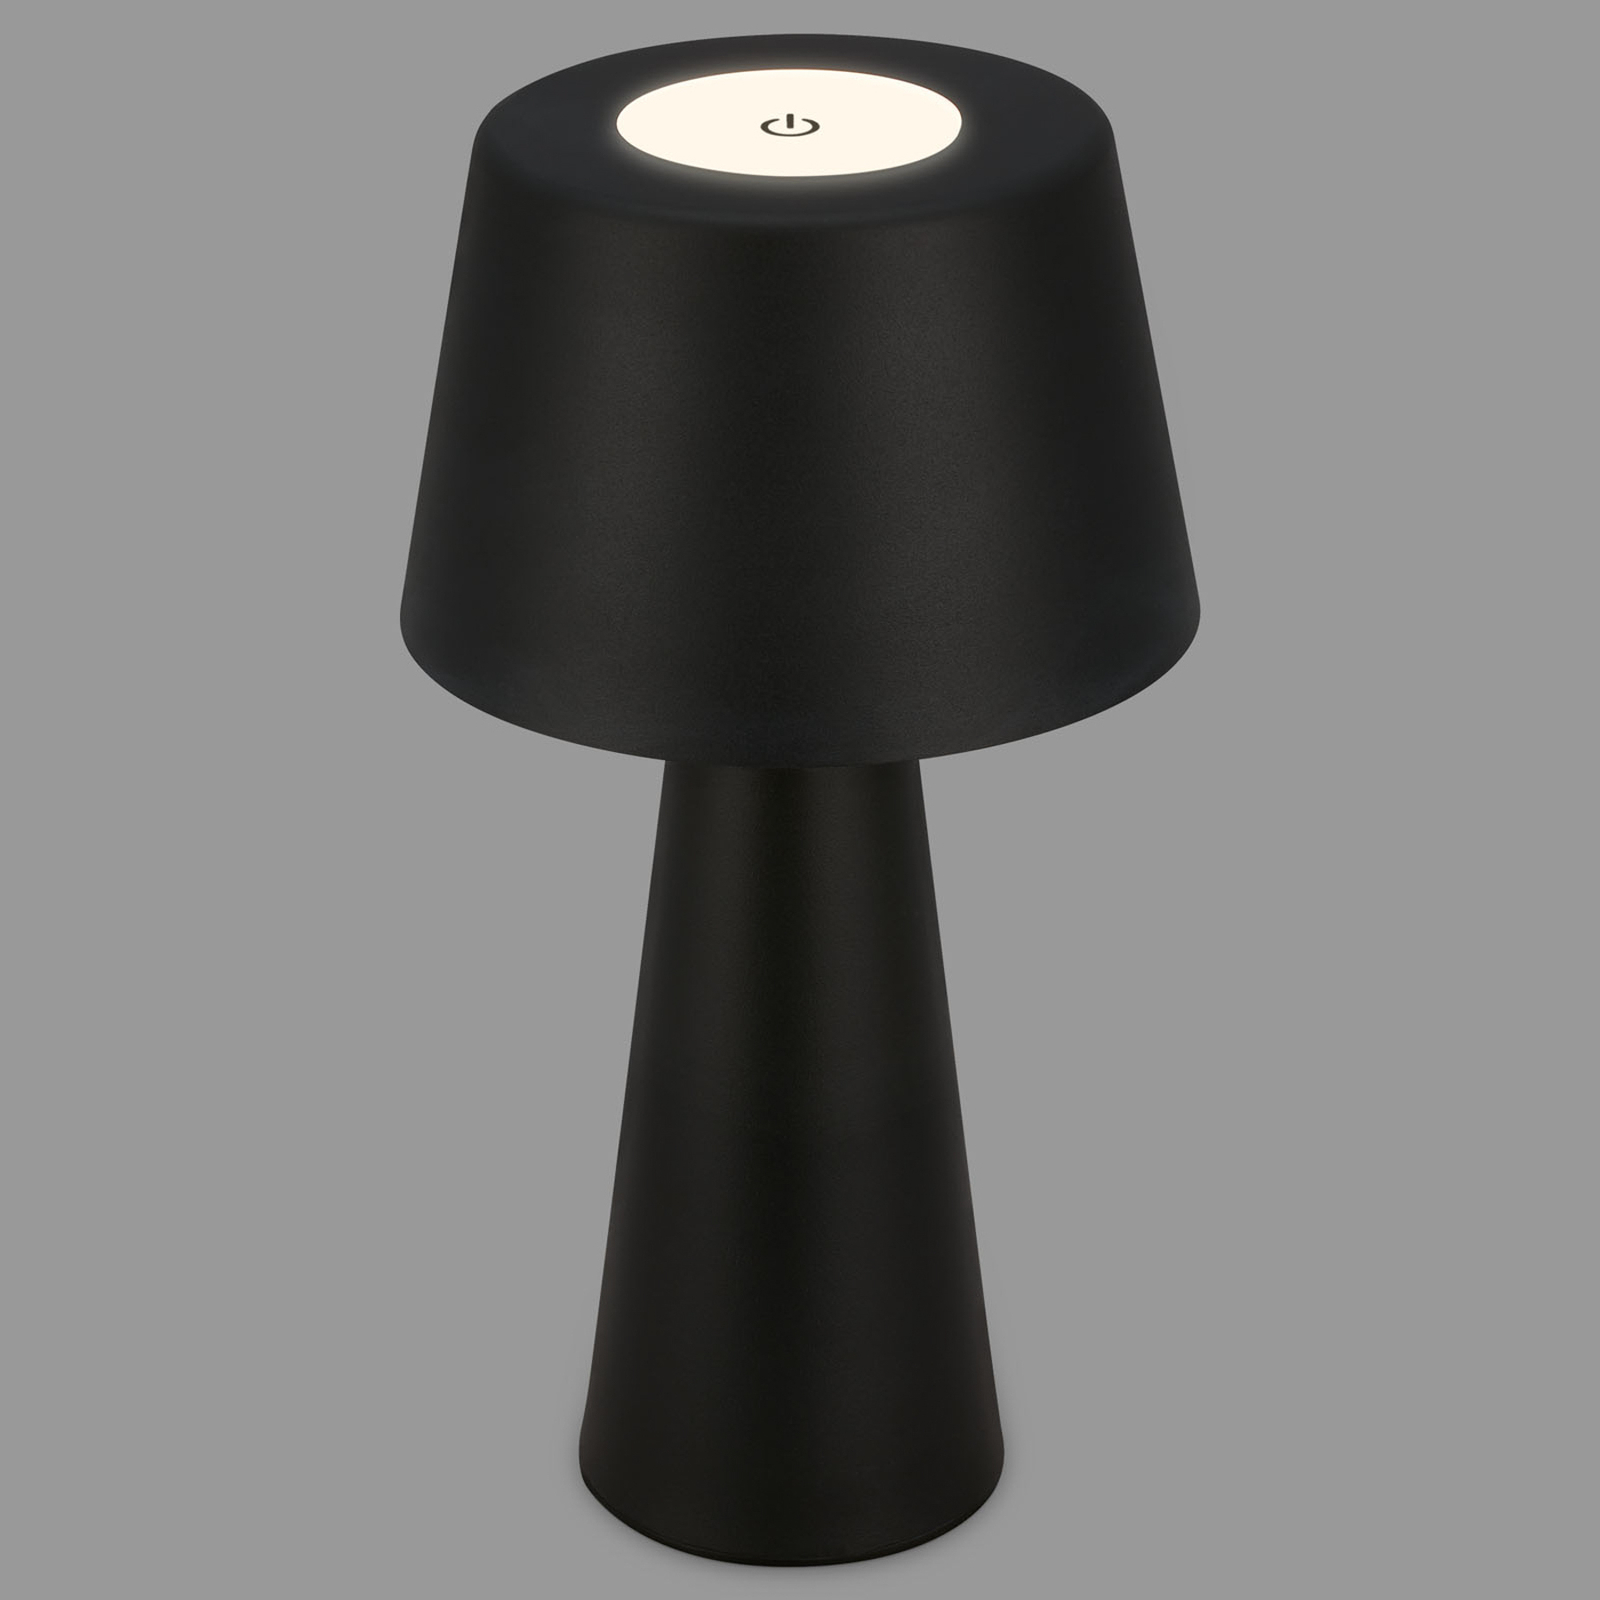 LED-bordslampa Kihi laddningsbart batteri, svart